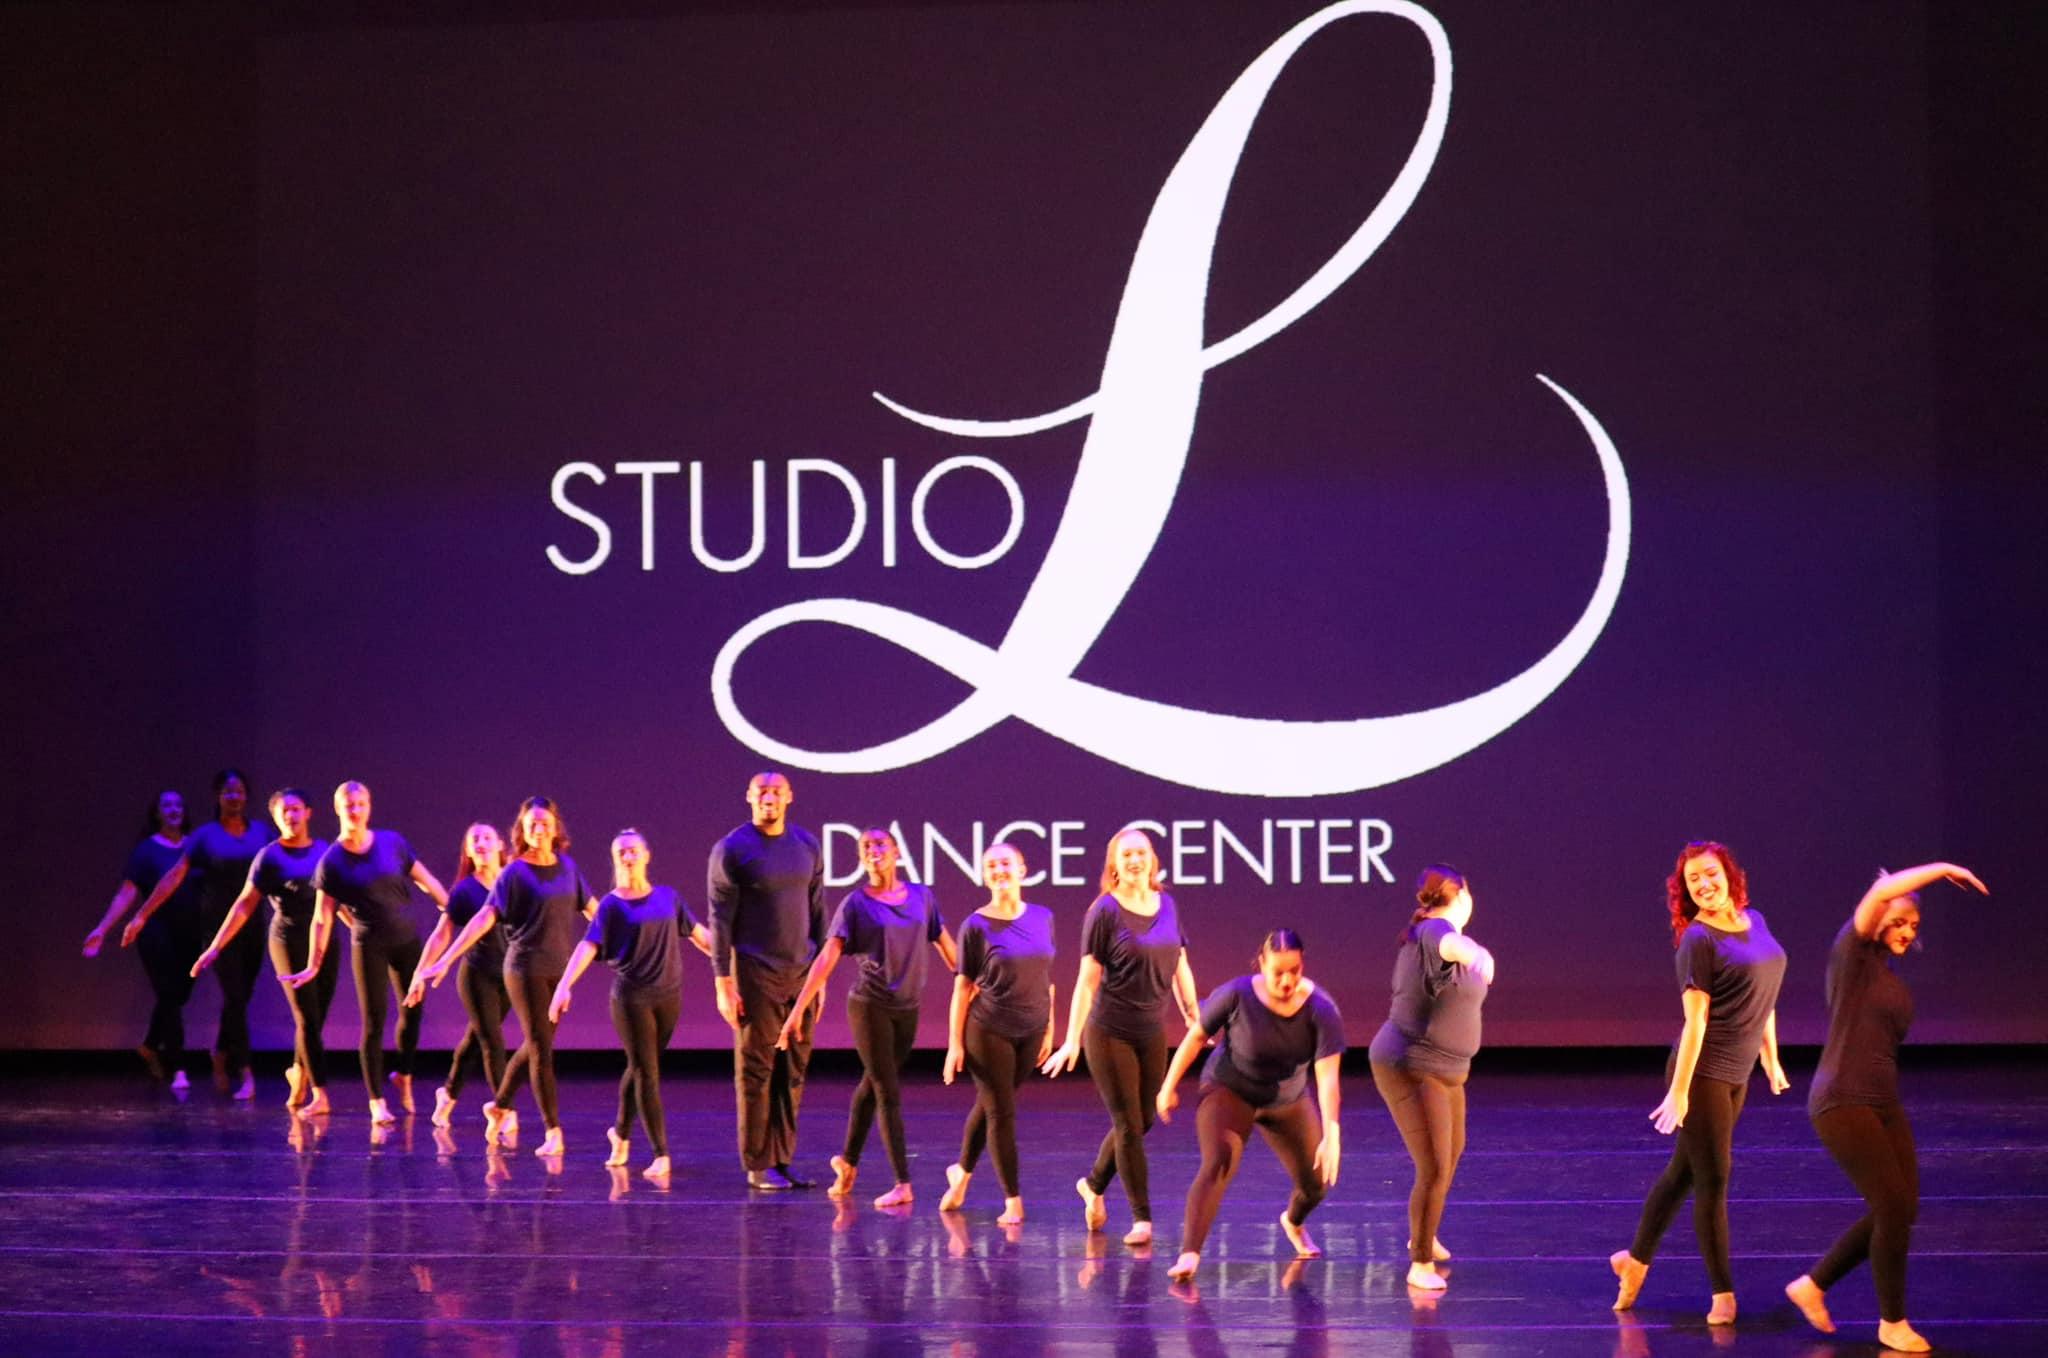 Studio L Dance Center - Dance Academy & Dance School